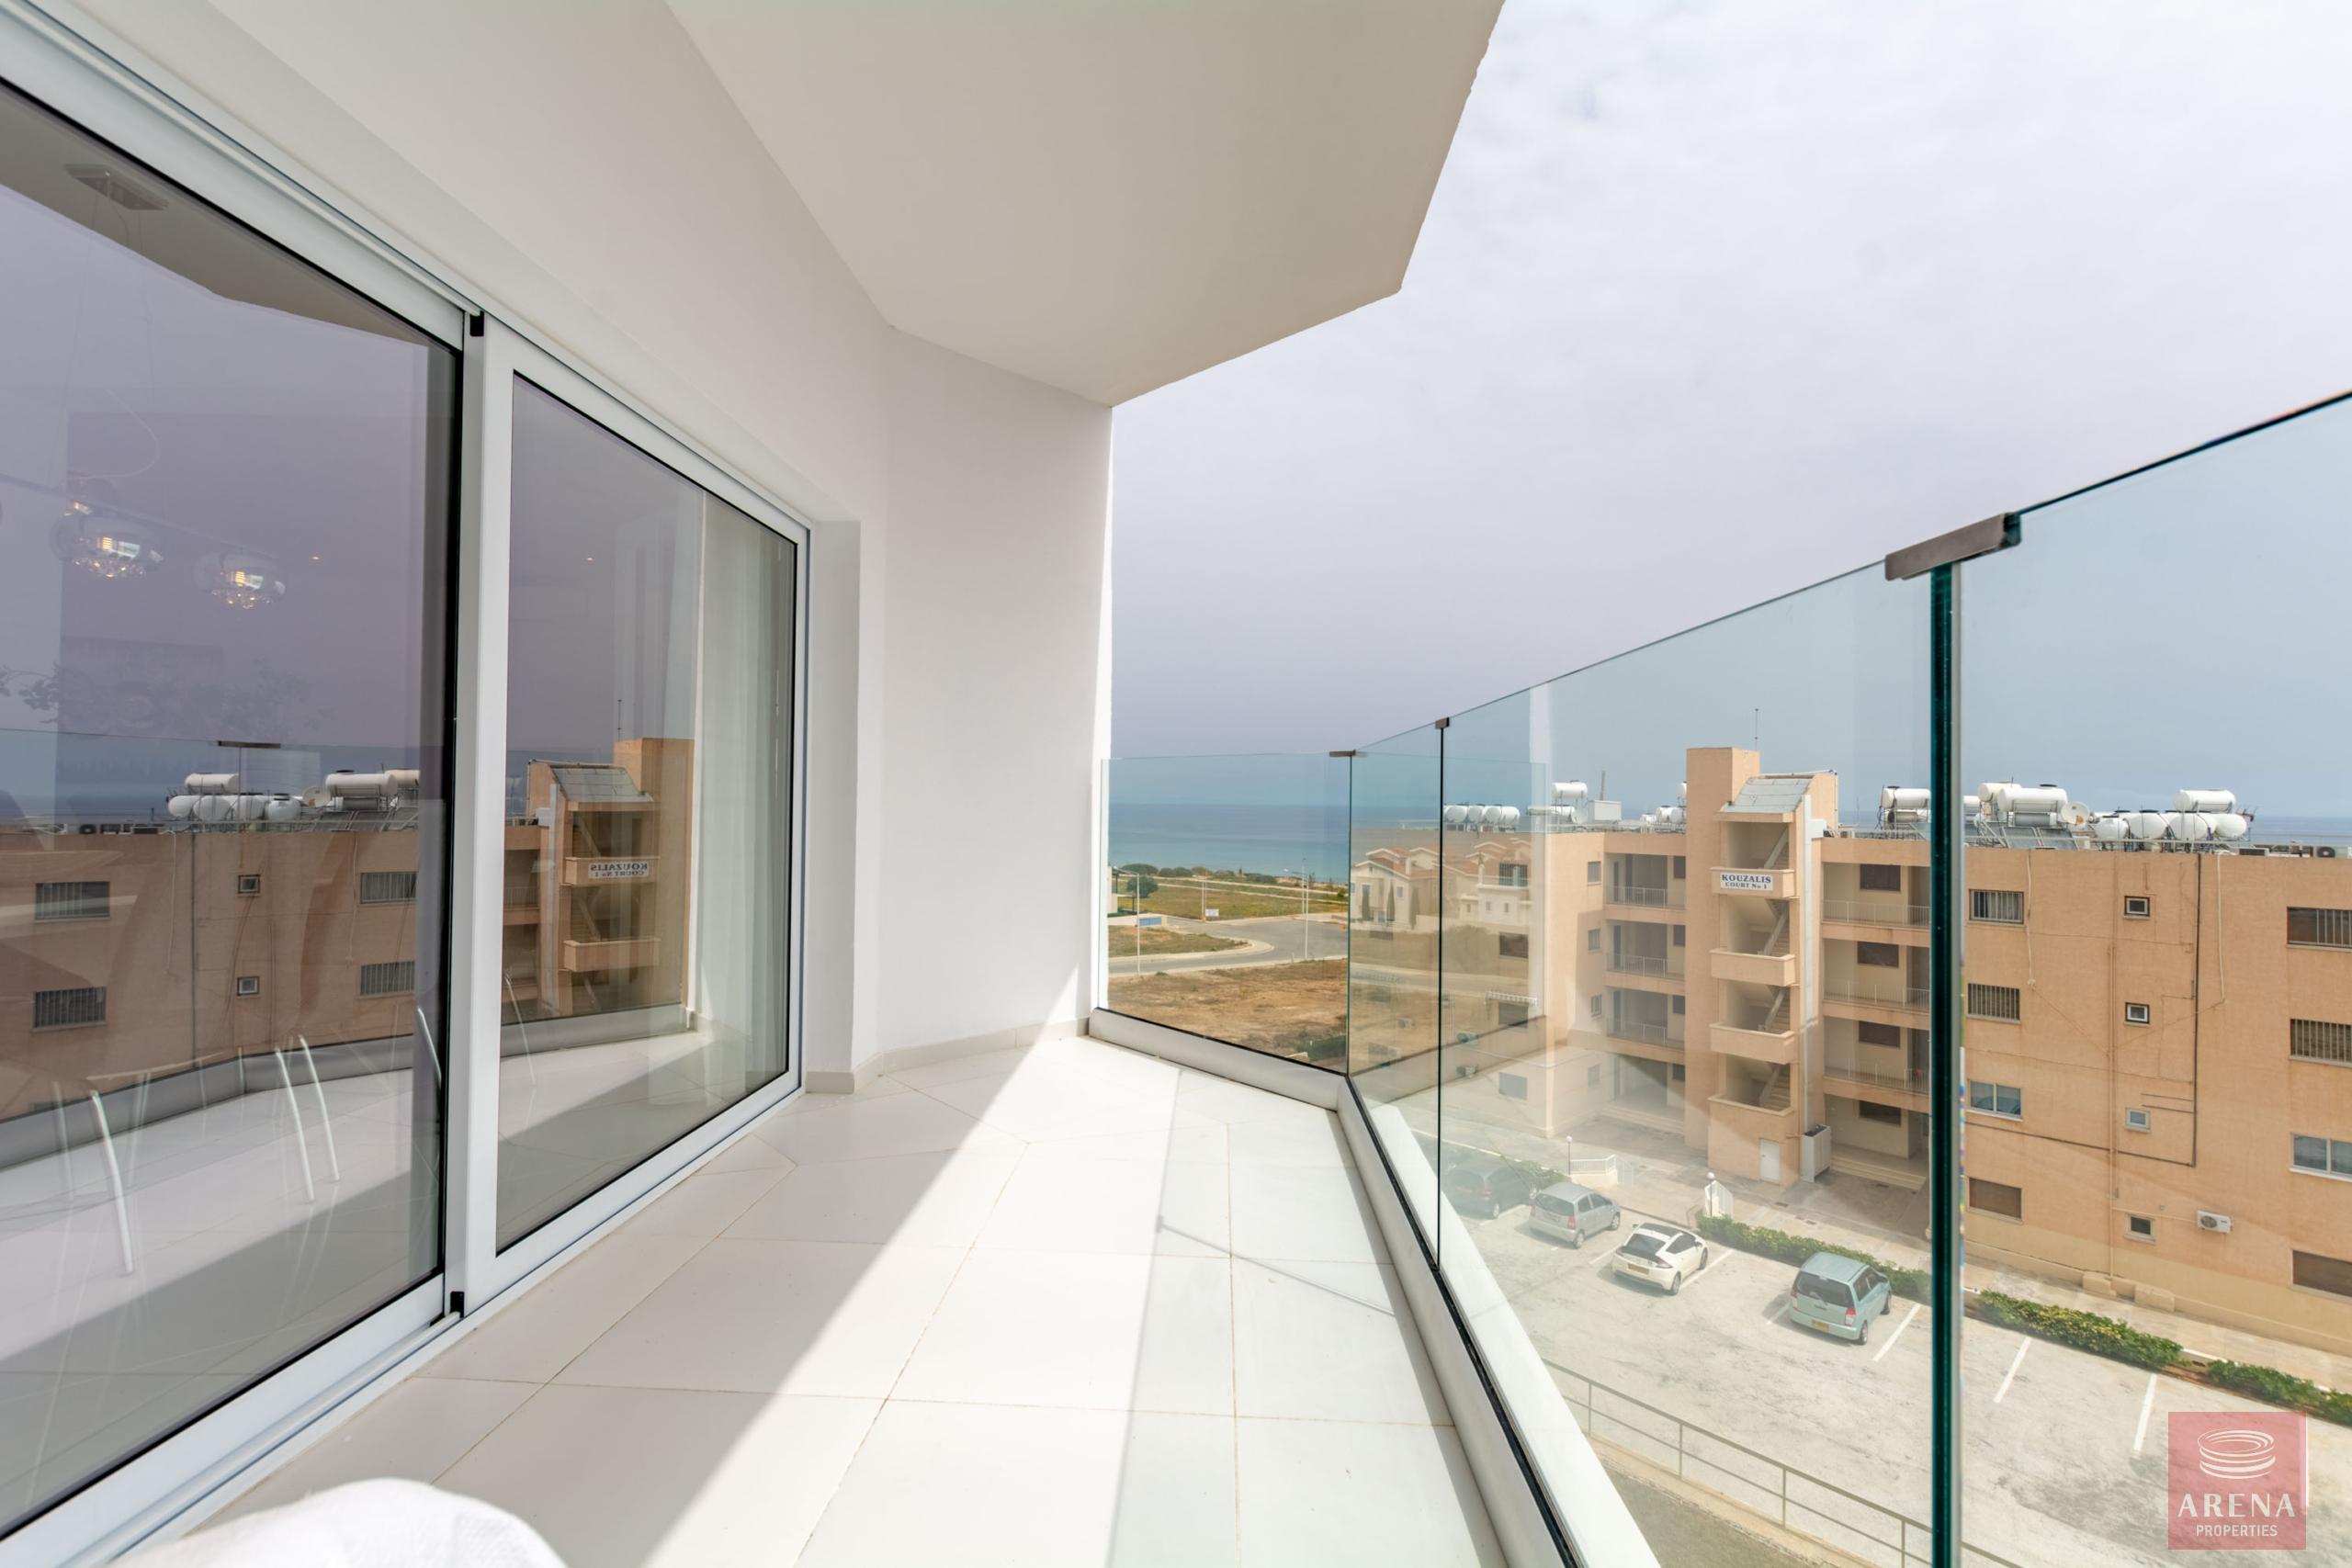 Apartment in Ayia Triada - balcony